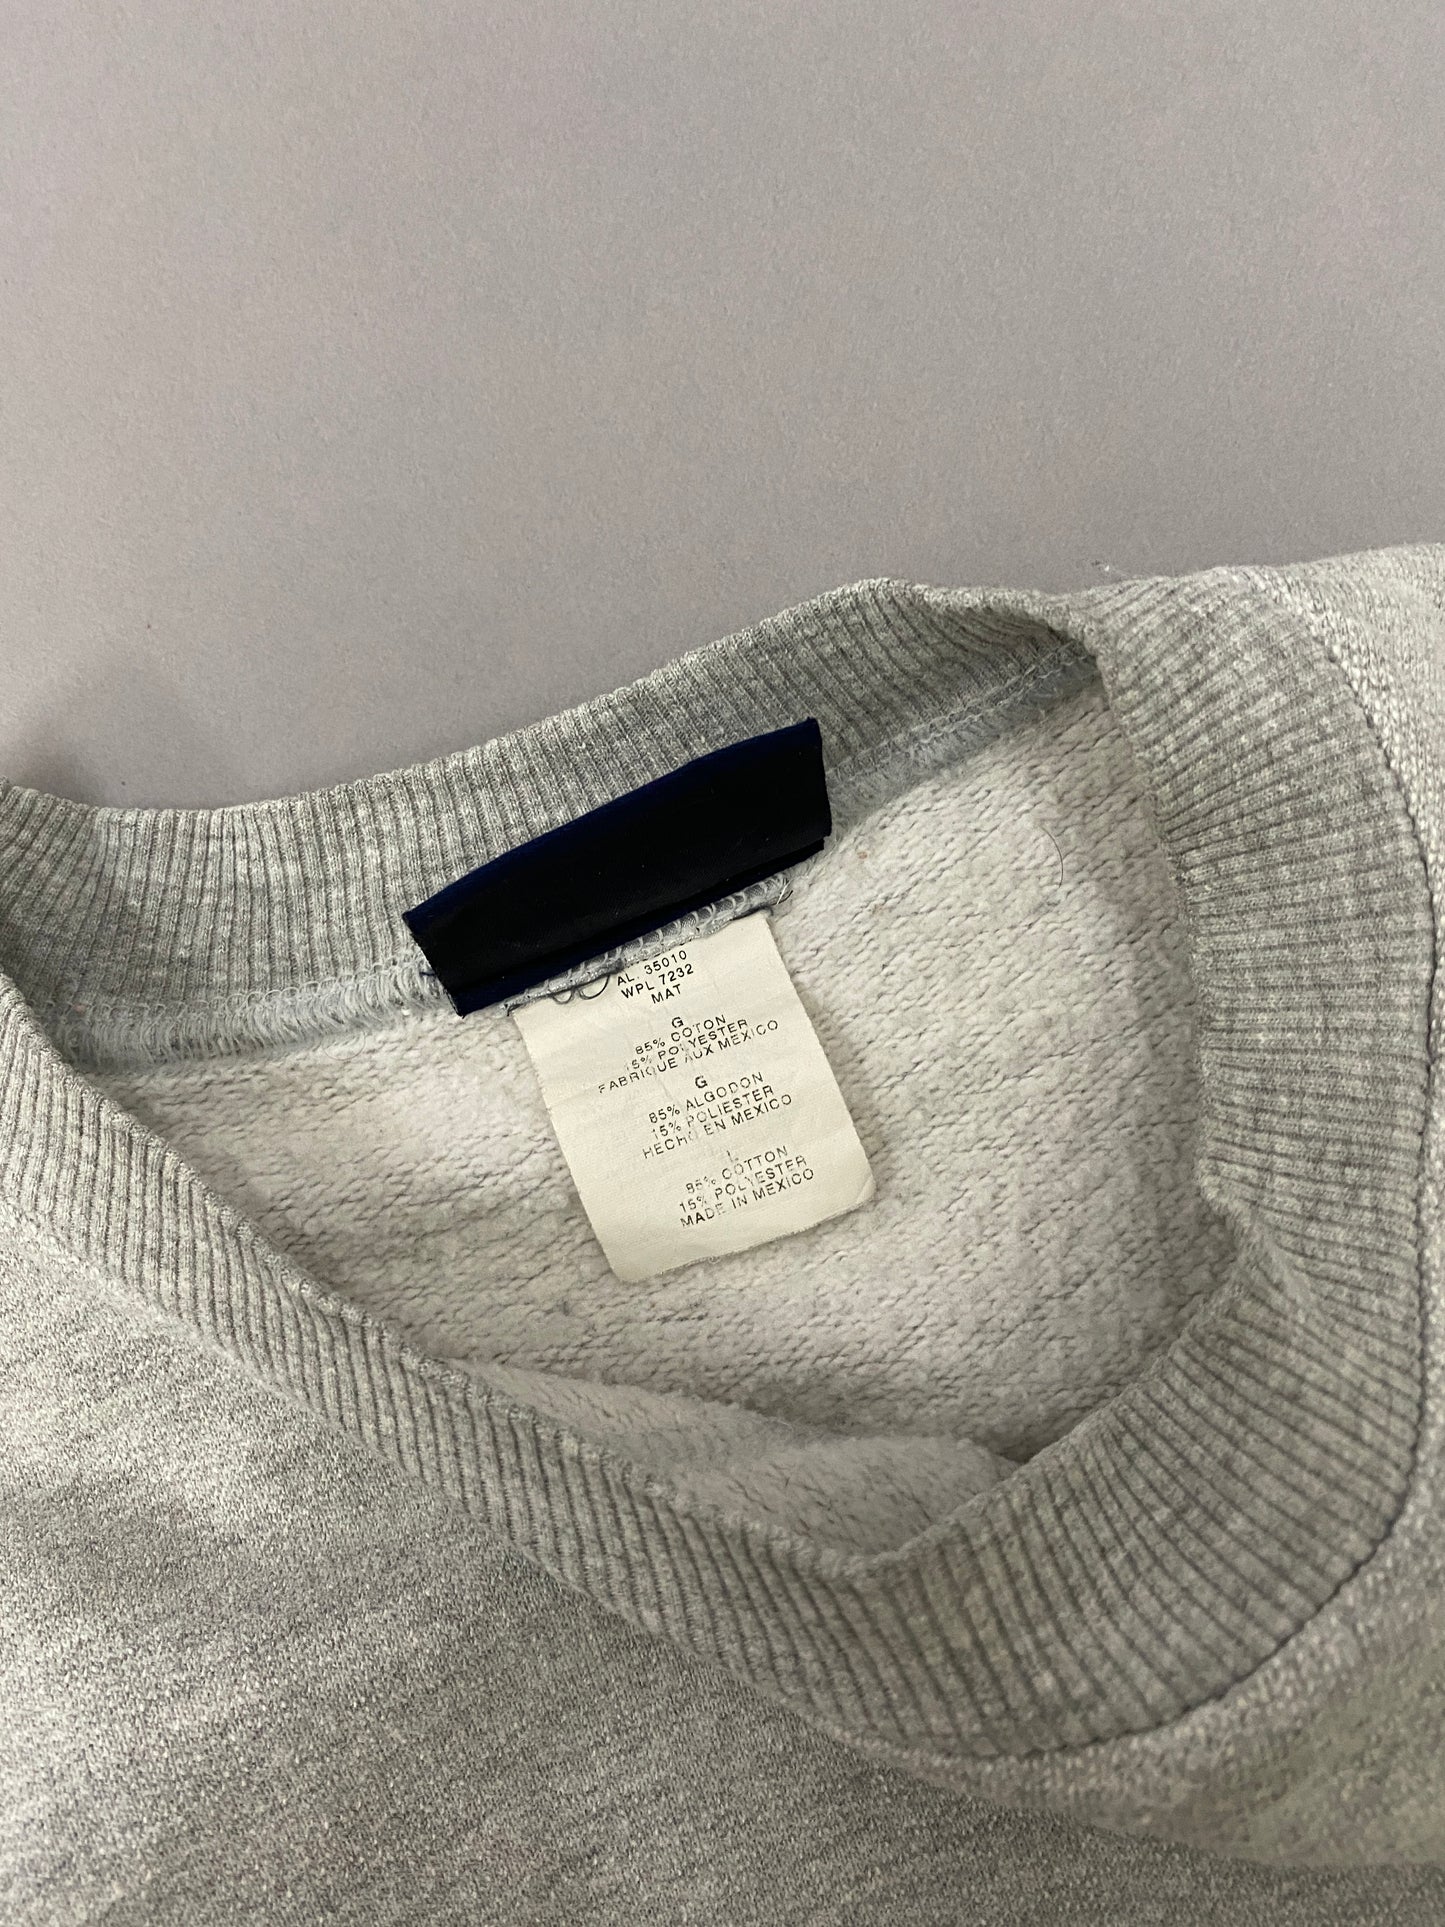 Will &amp; Grace Vintage Sweatshirt